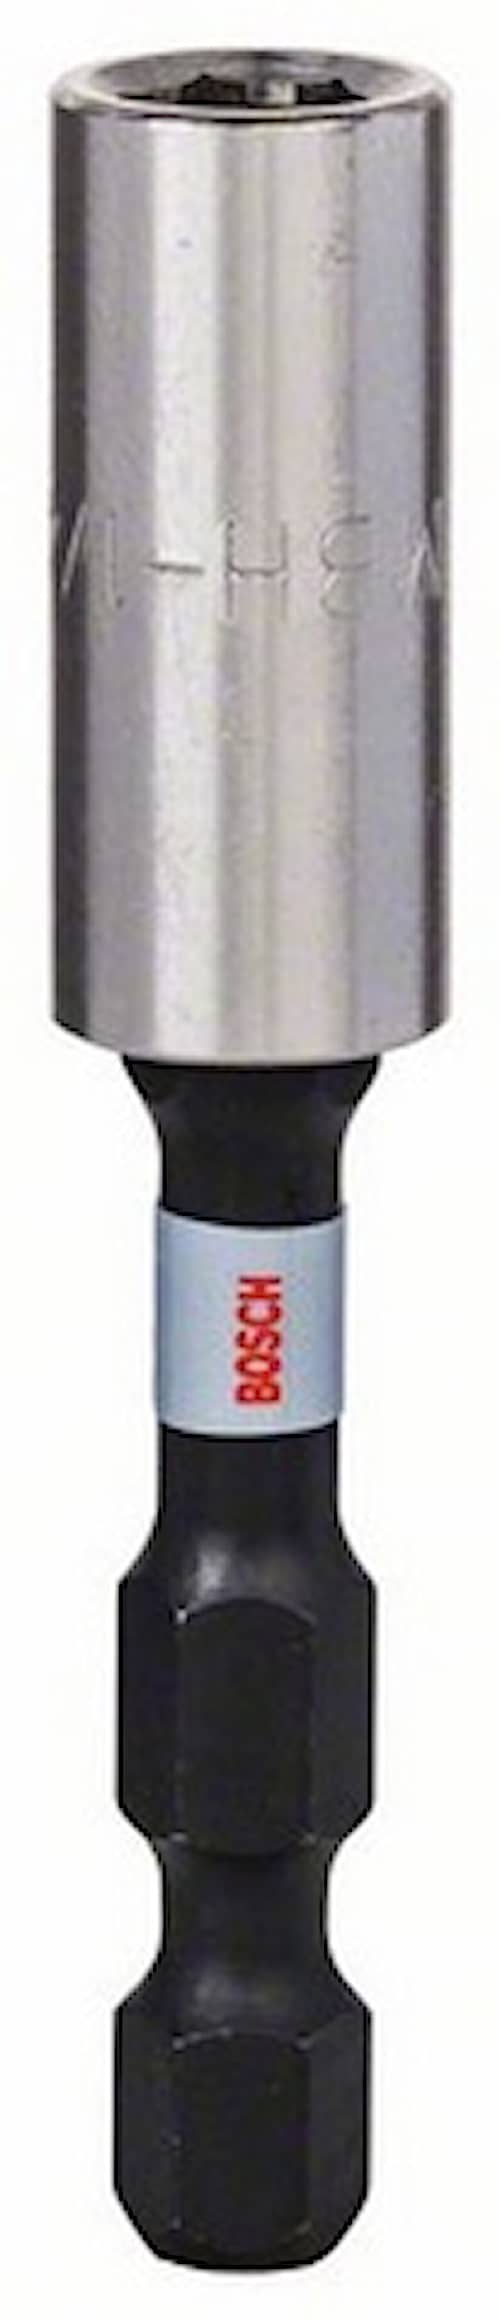 Bosch Impact Control -kärjenpidin Standard, 1 kpl 1/4 tuumaa, L 60 mm